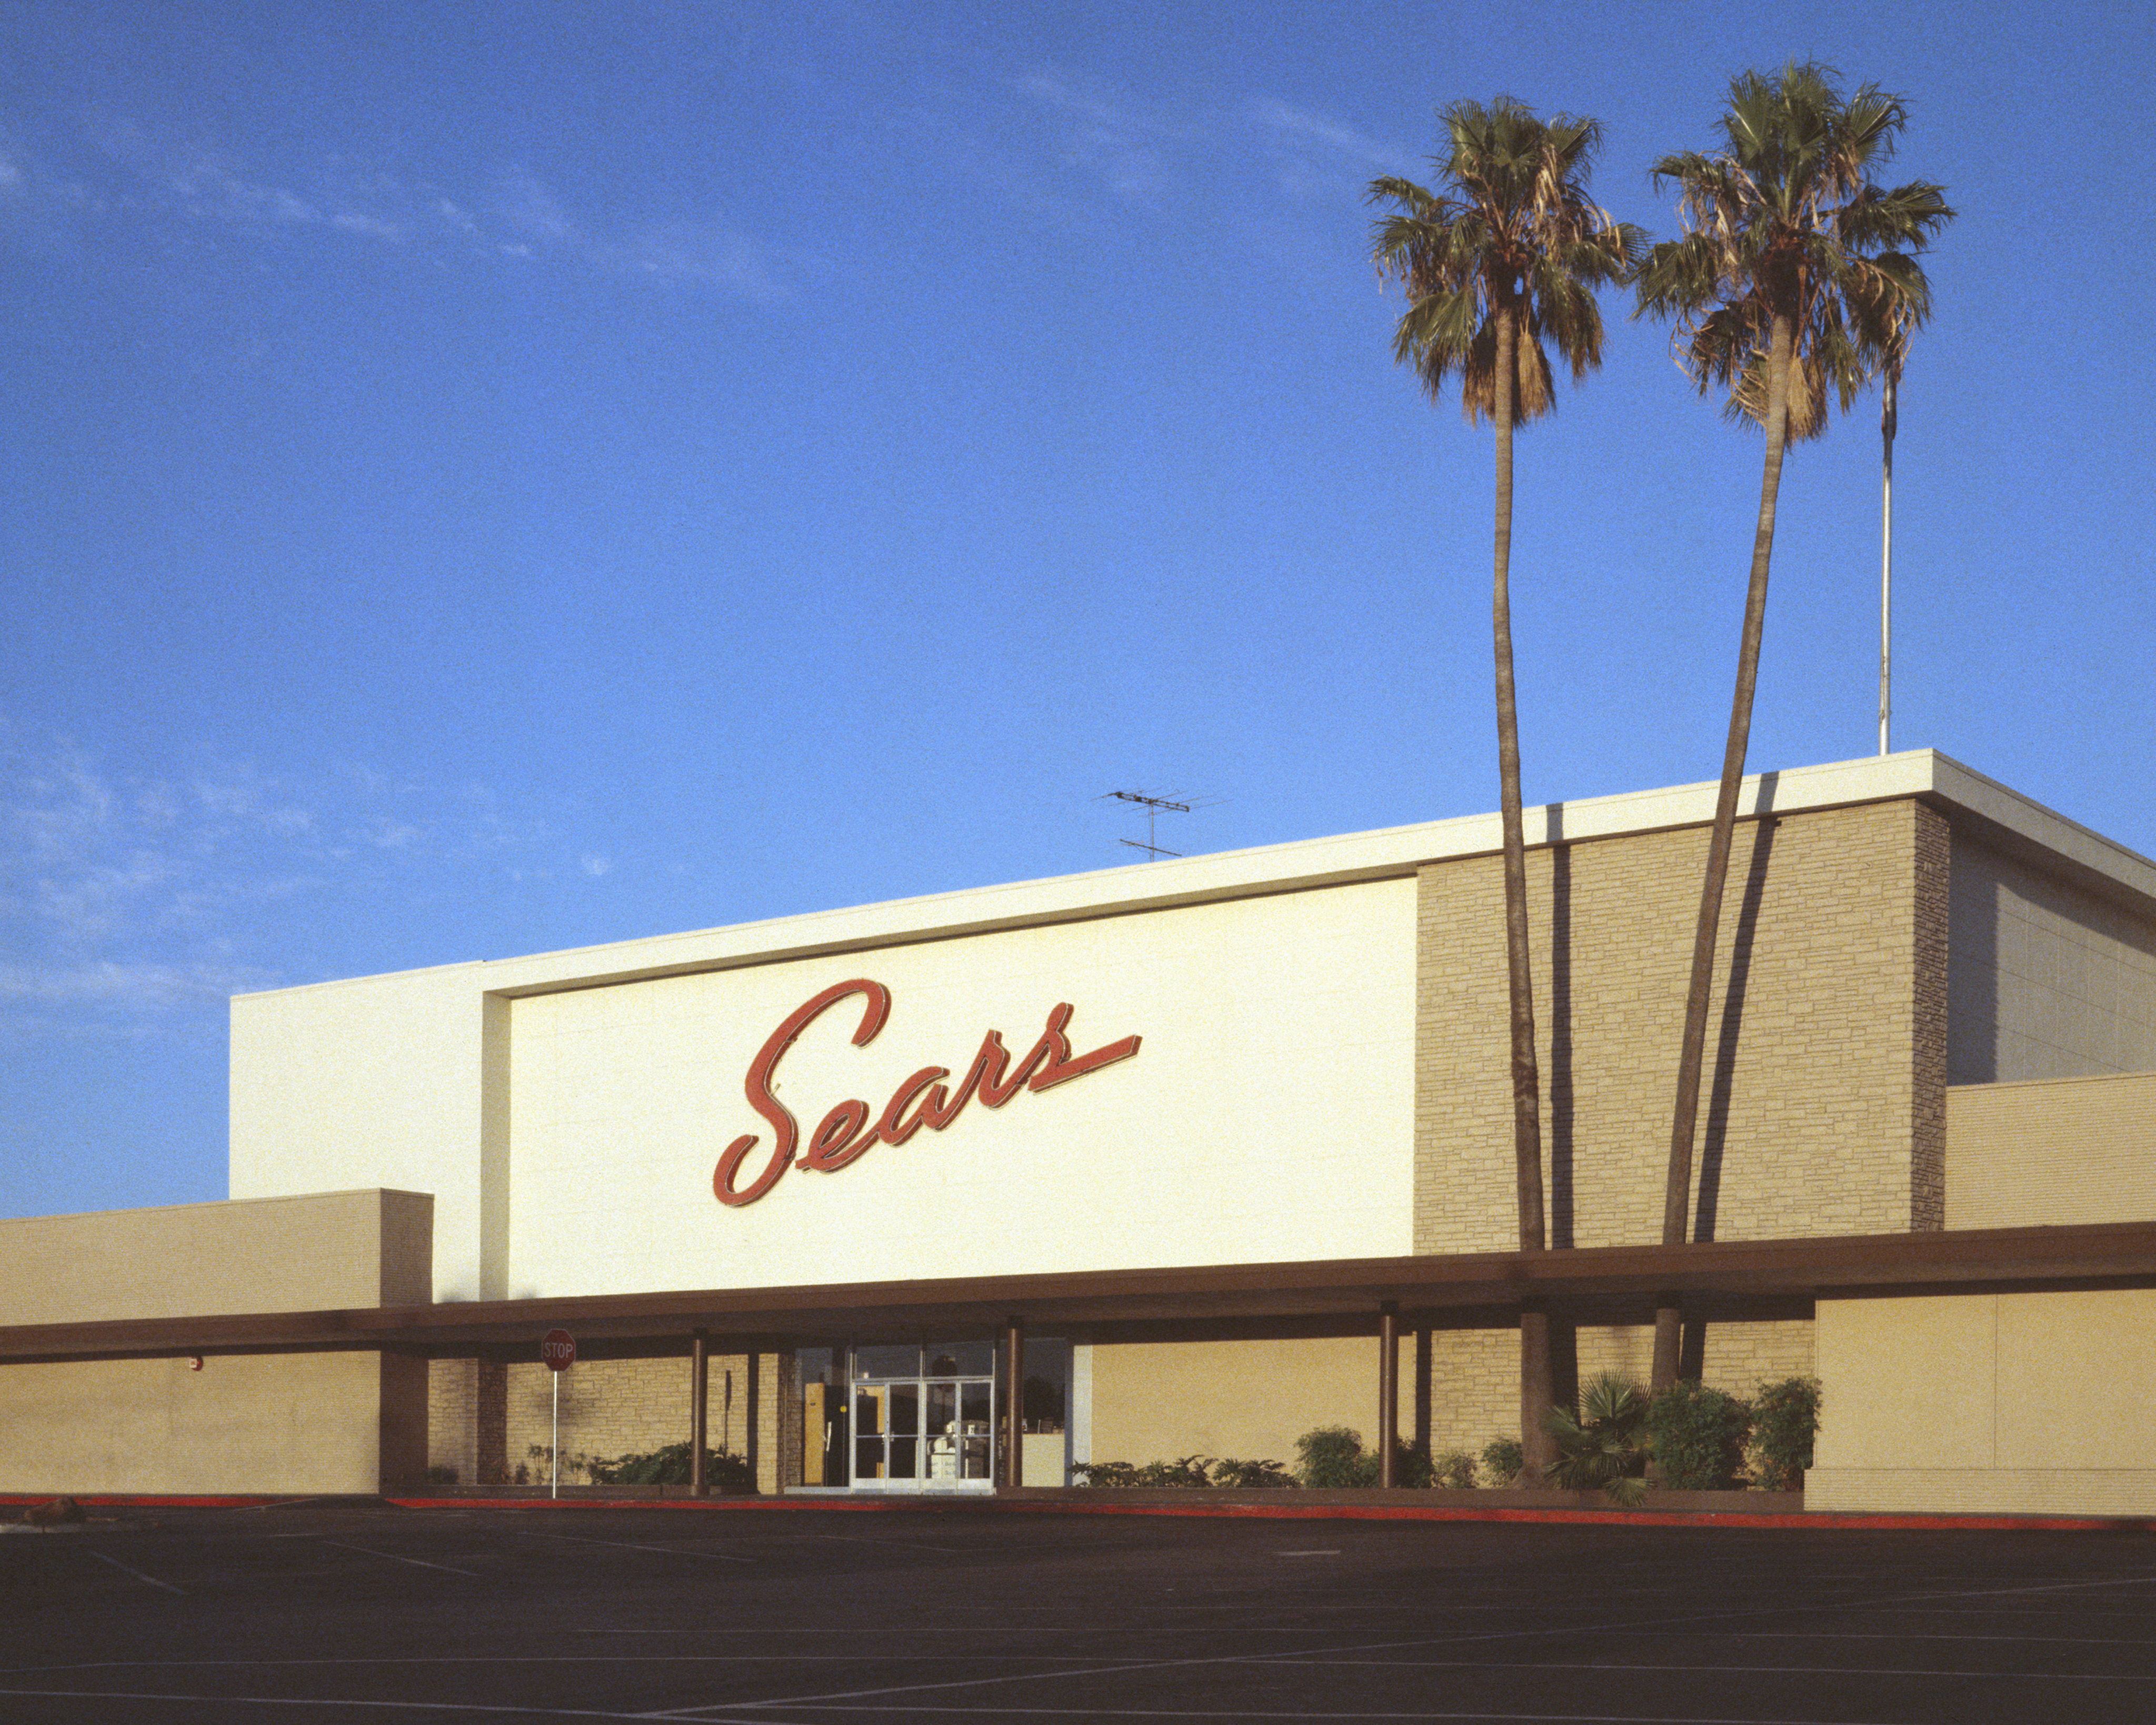 Sears - Mountain View, California U.S.A. - 1990